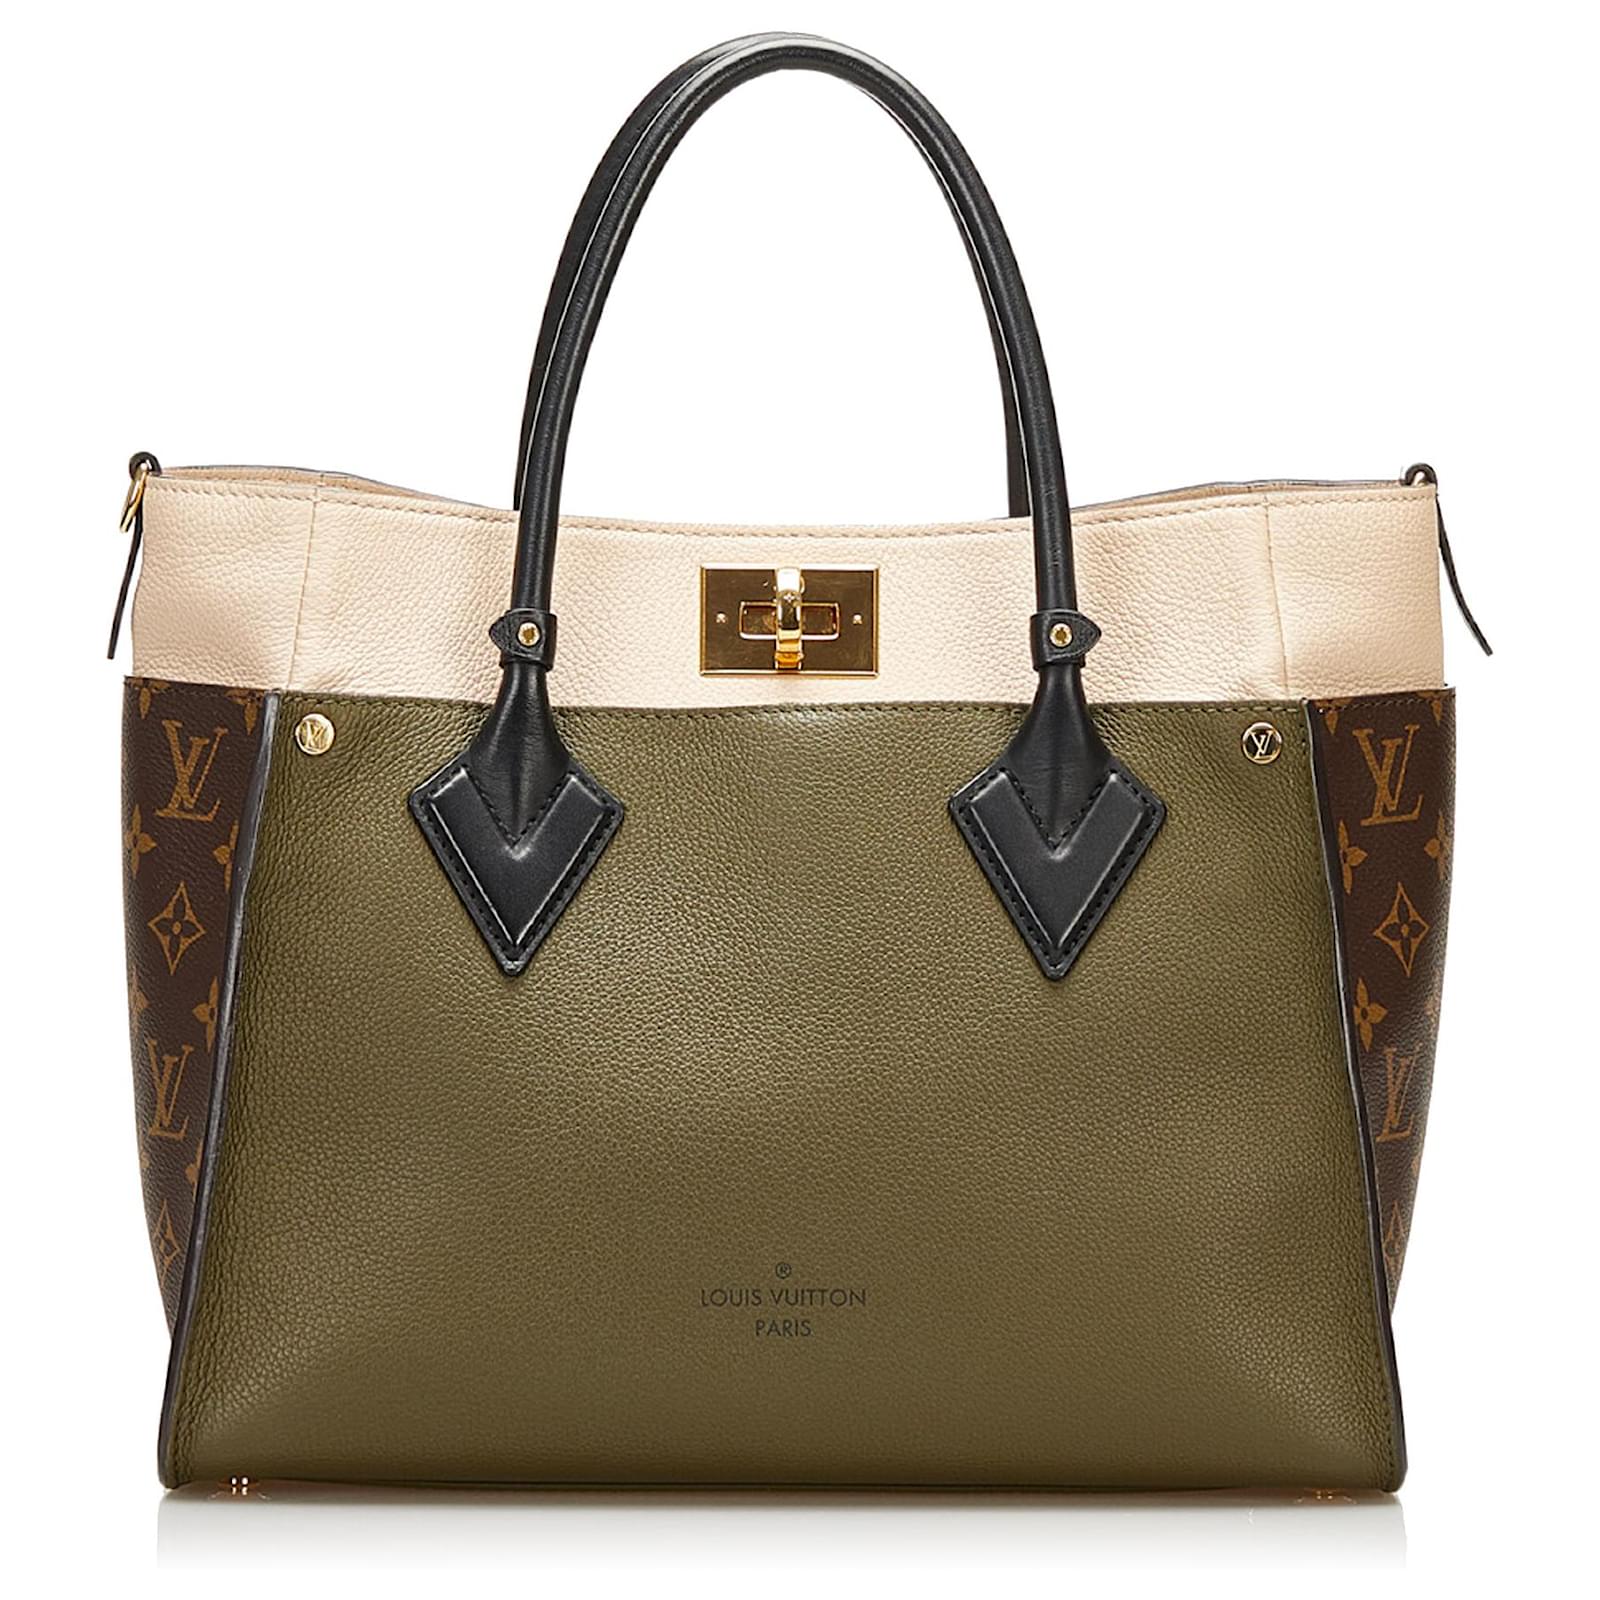 Louis Vuitton Green Leather Twist Bag